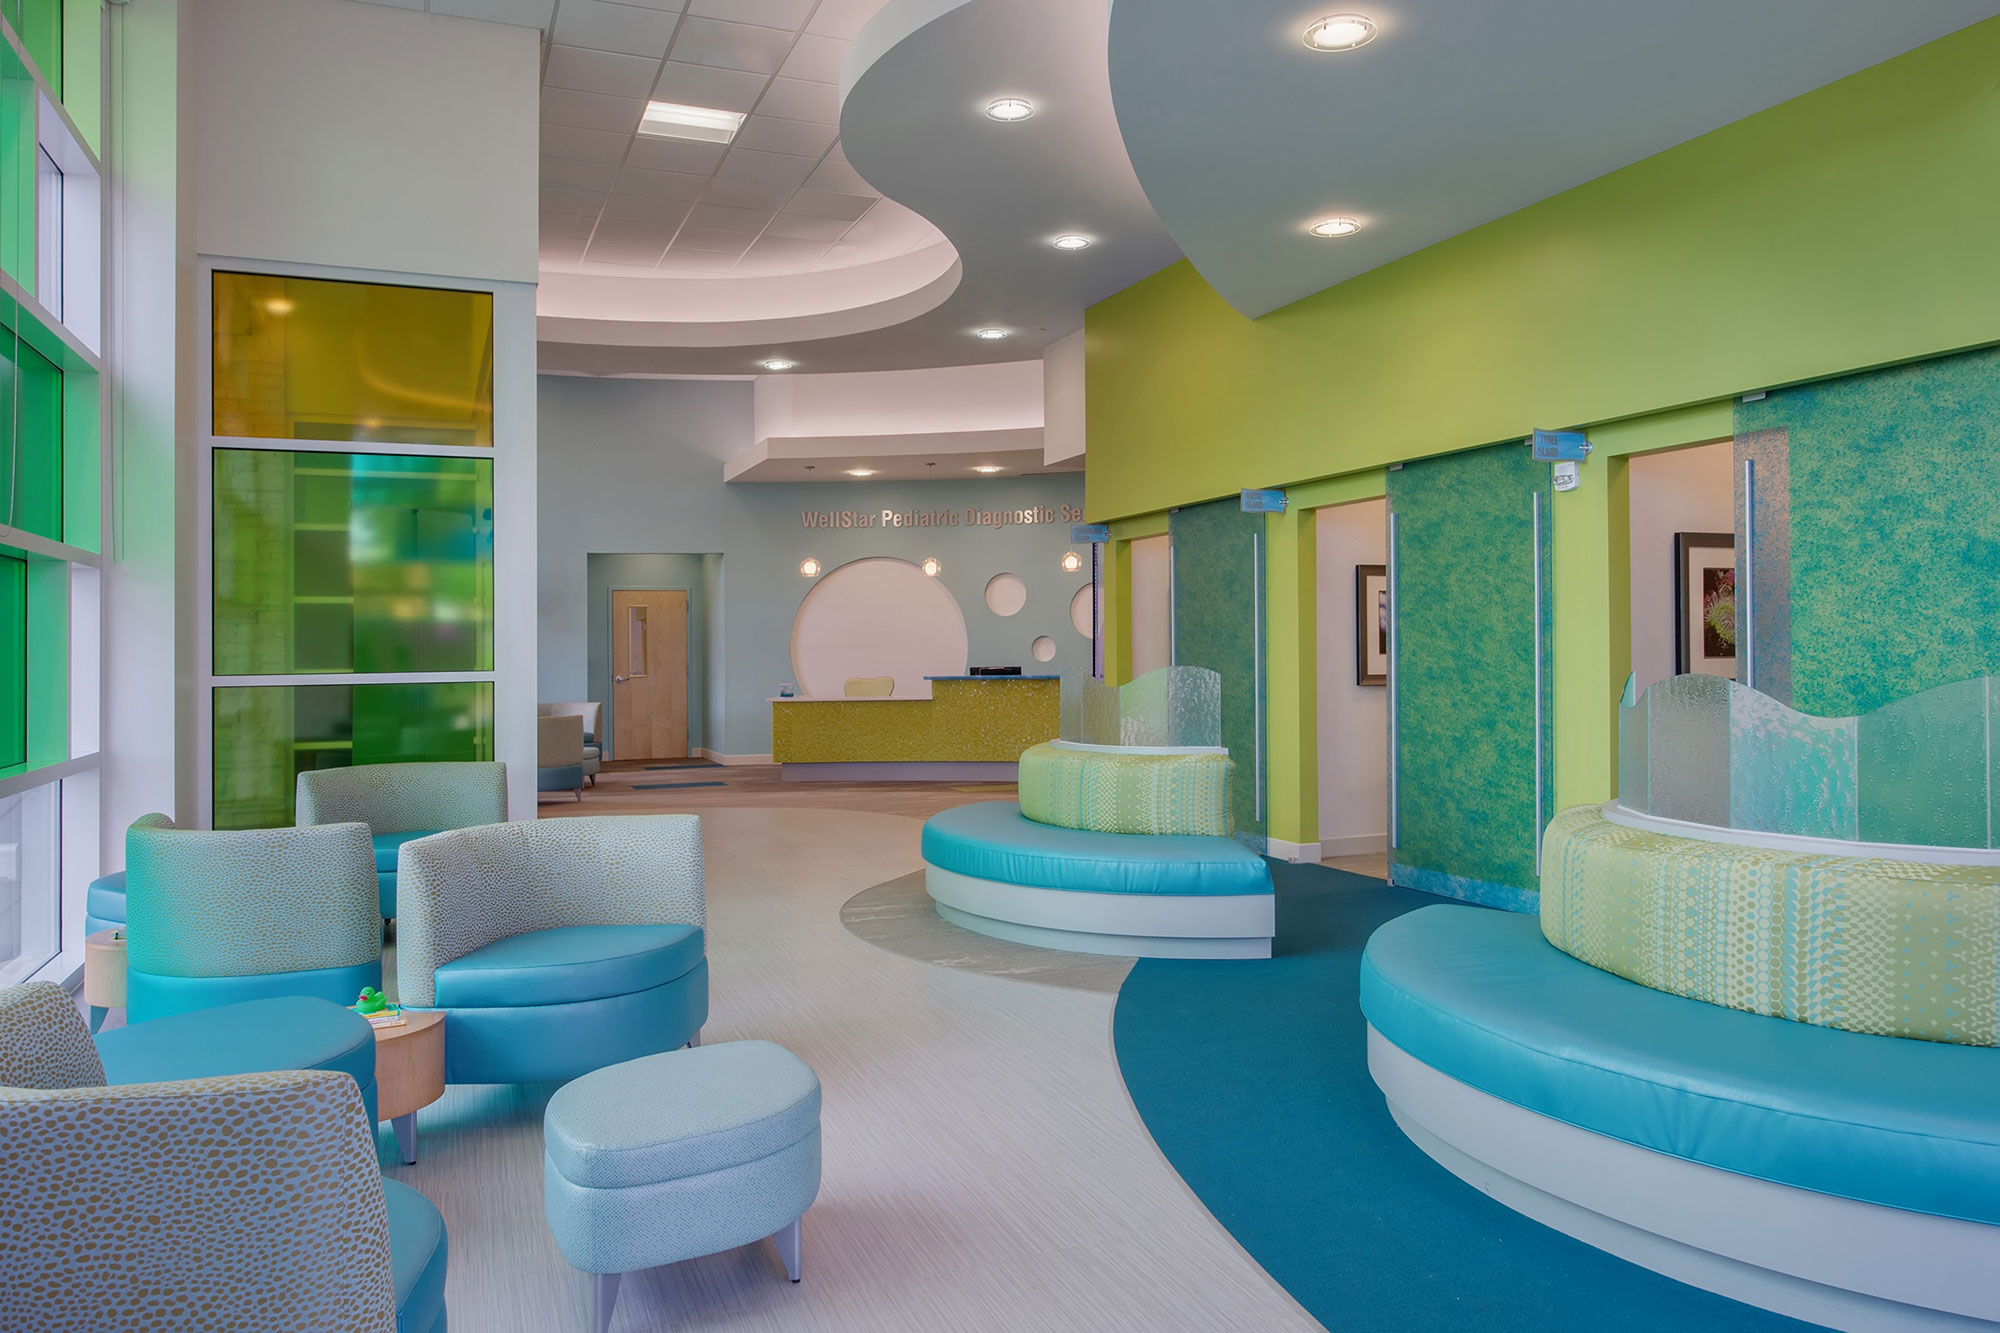 Wellstar Pediatric Imaging Center (2)